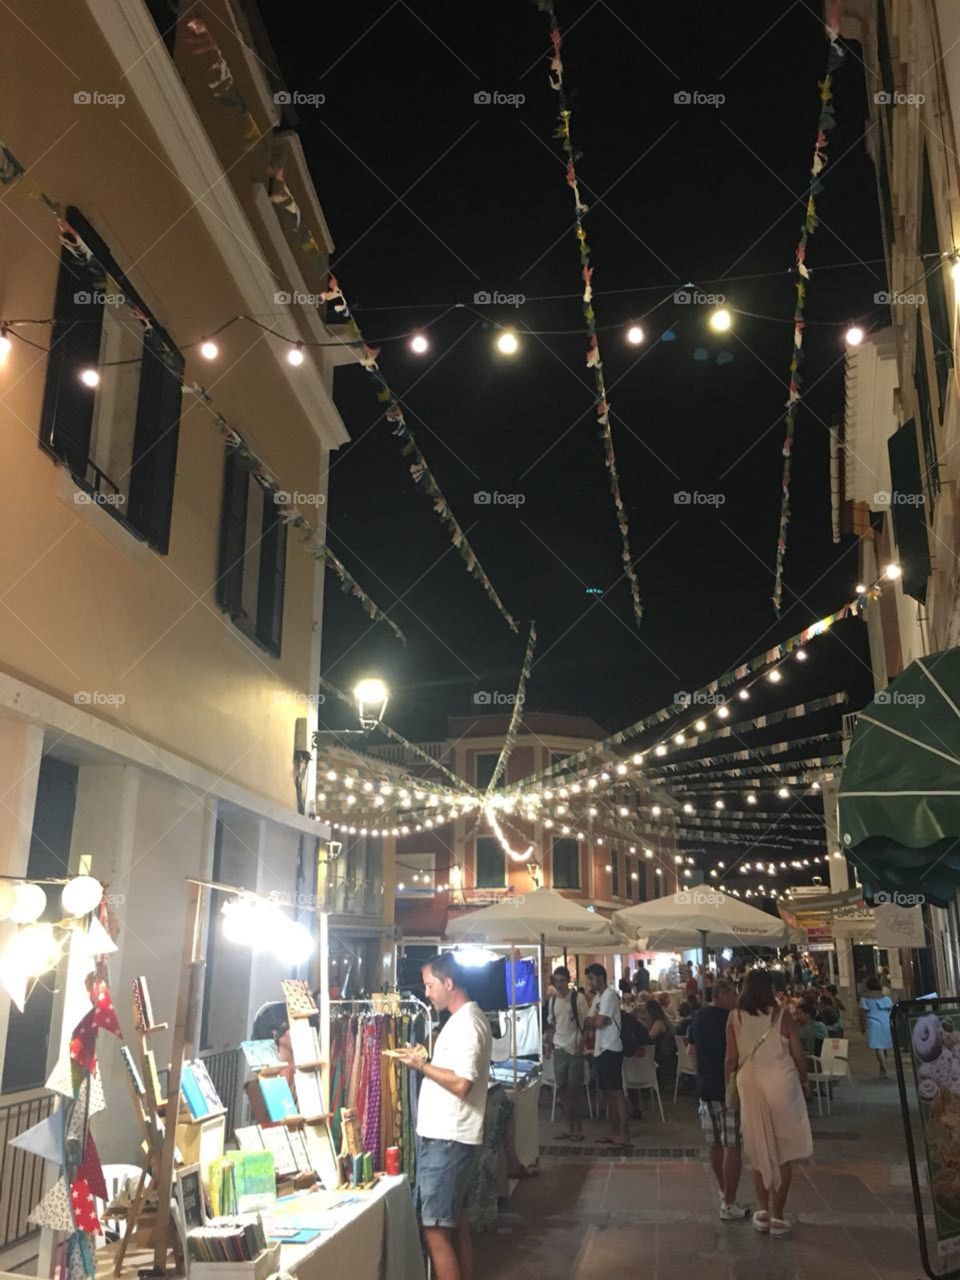 The evening markets in Menorca.